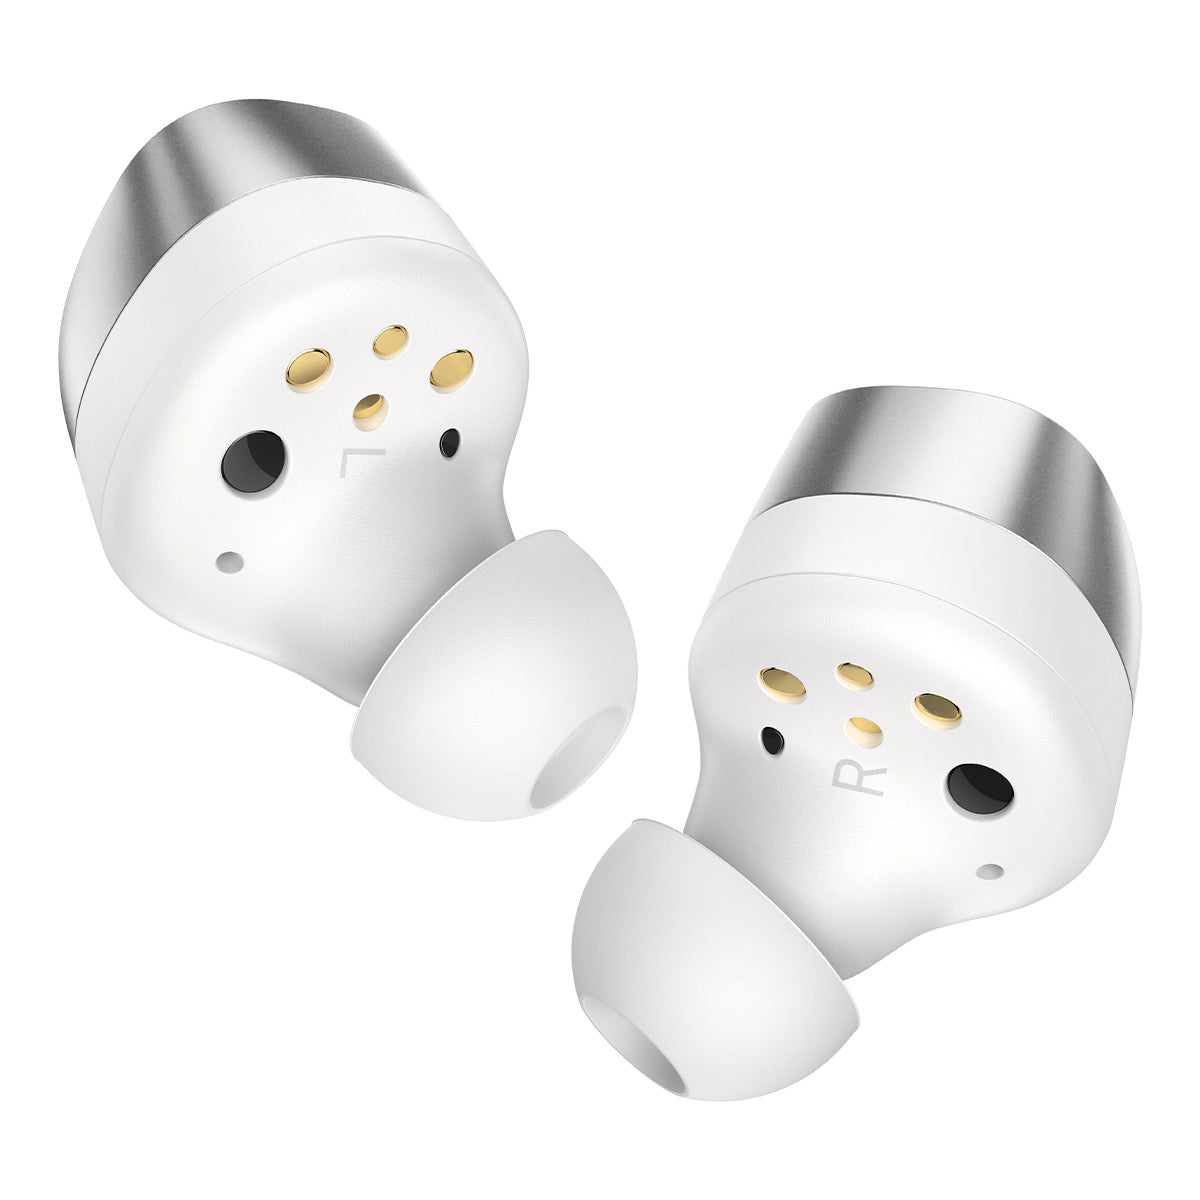 Sennheiser Momentum True Wireless 4 Earbuds (White Silver)